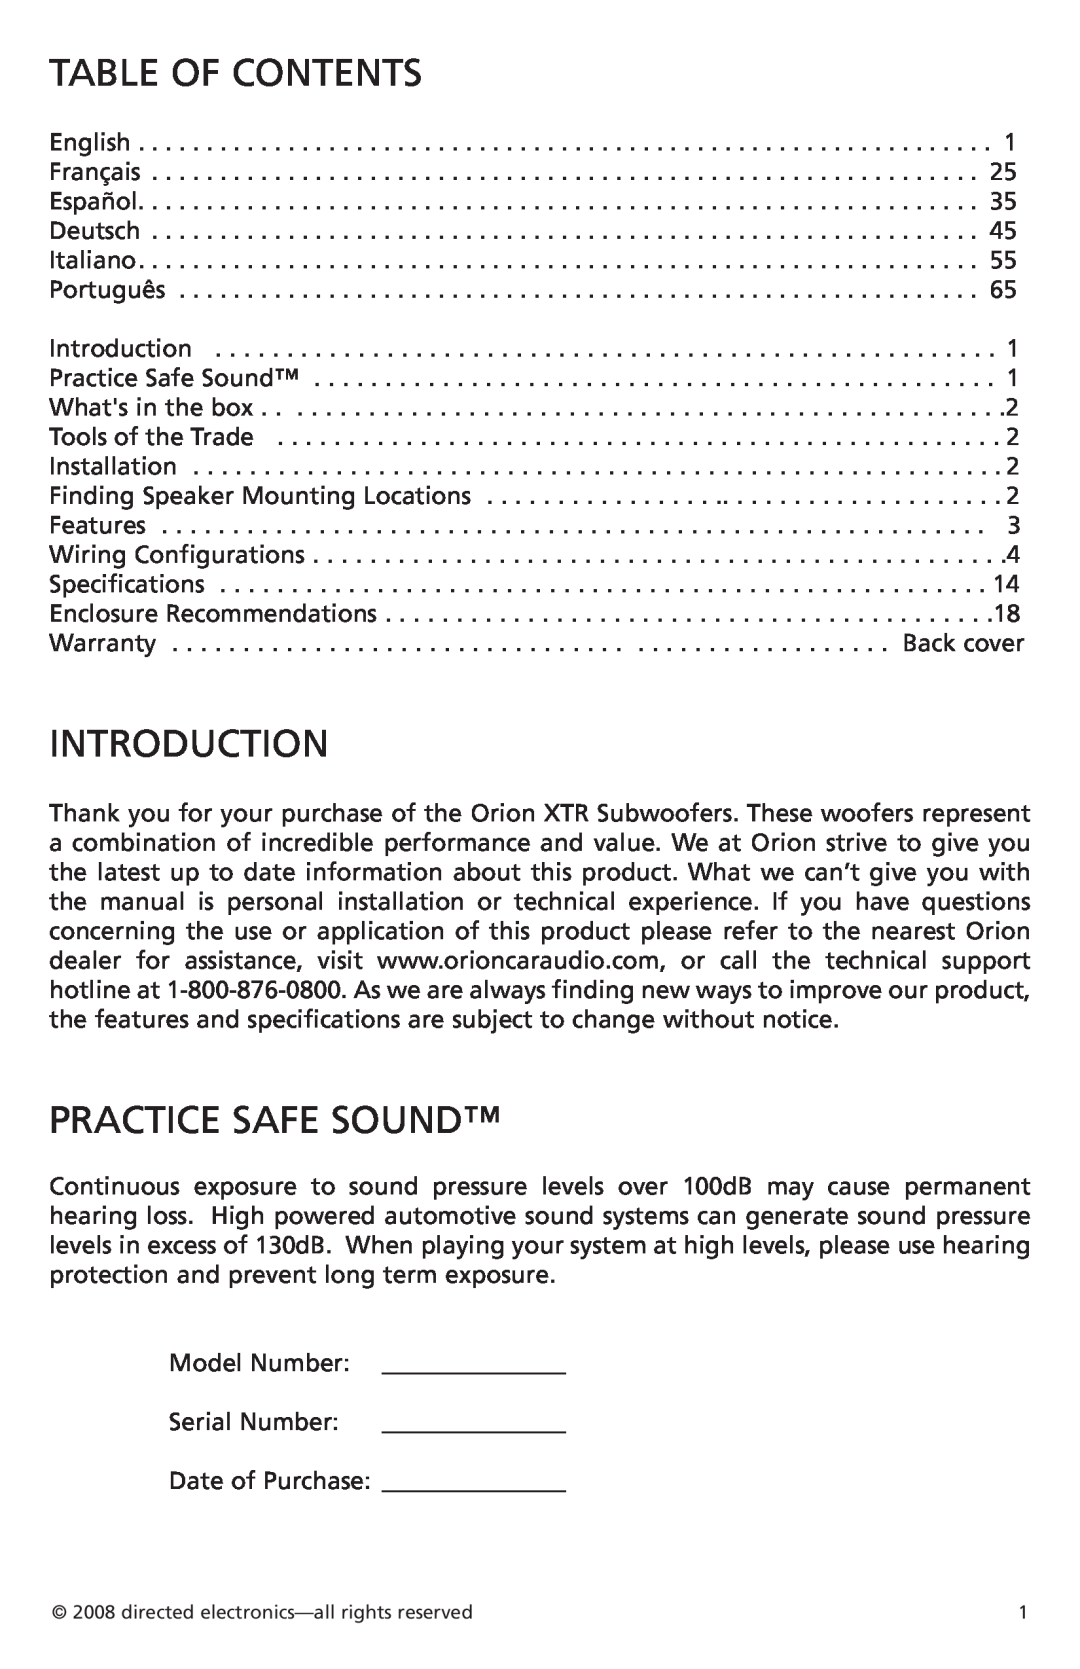 Orion Car Audio XTR152, XTR154, XTR122, XTR124, XTR104, XTR102 owner manual Table Of Contents, Introduction, Practice Safe Sound 